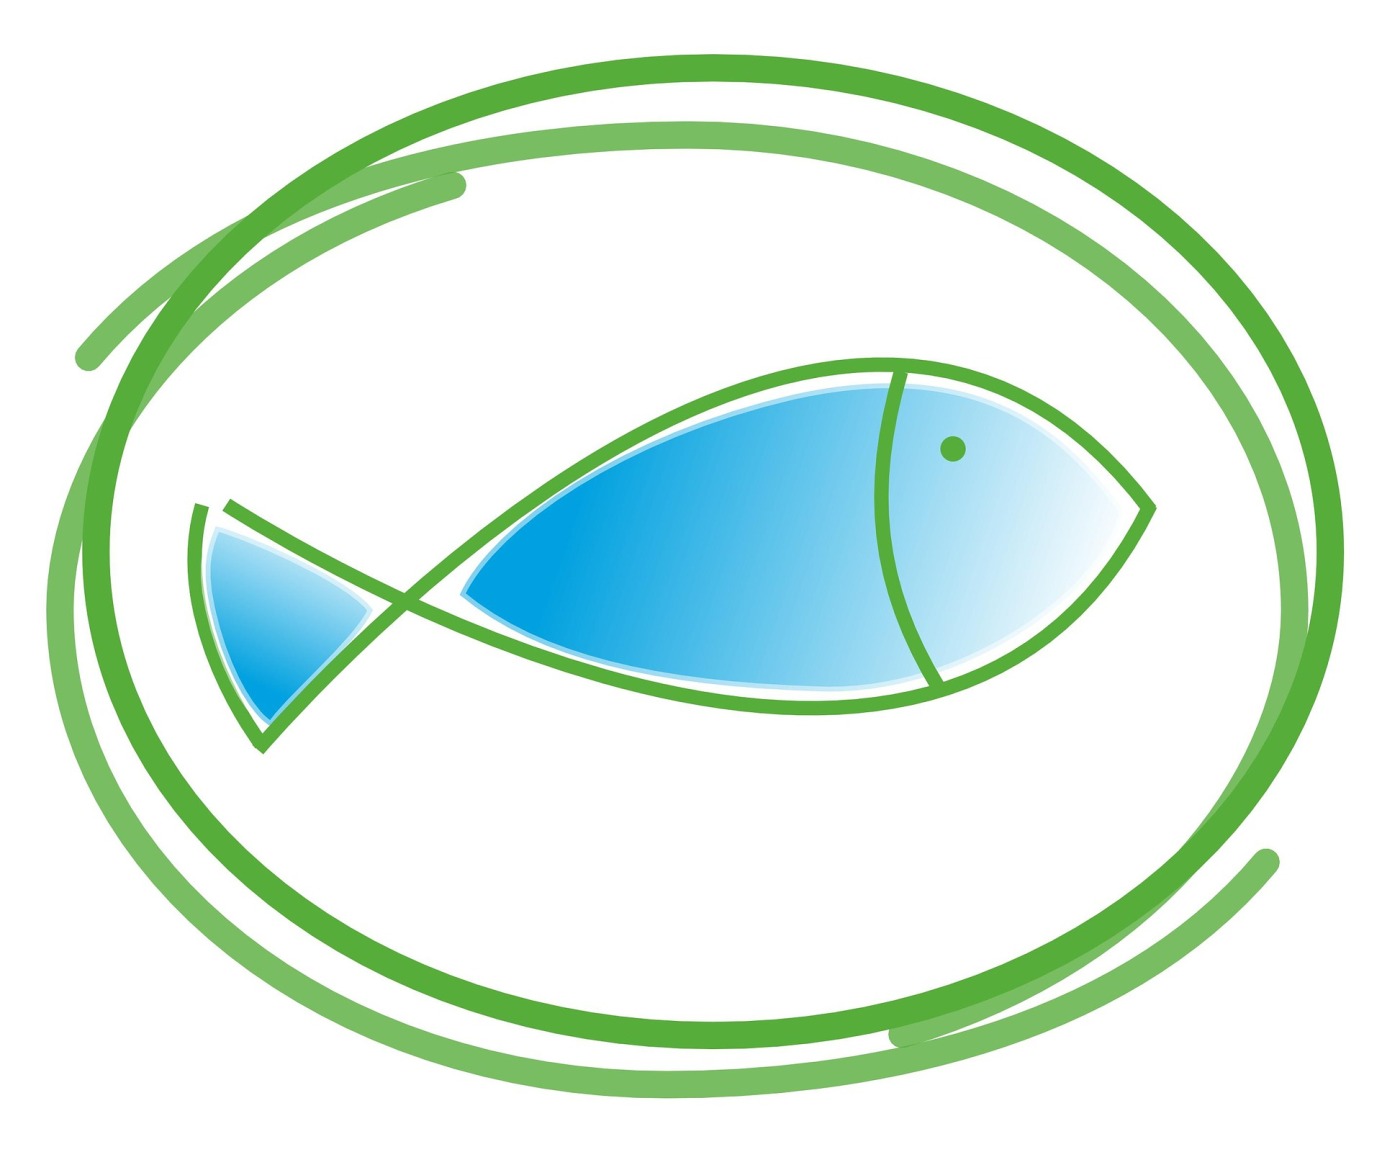 fish-2063720_1920 (c) www.pixabay.com